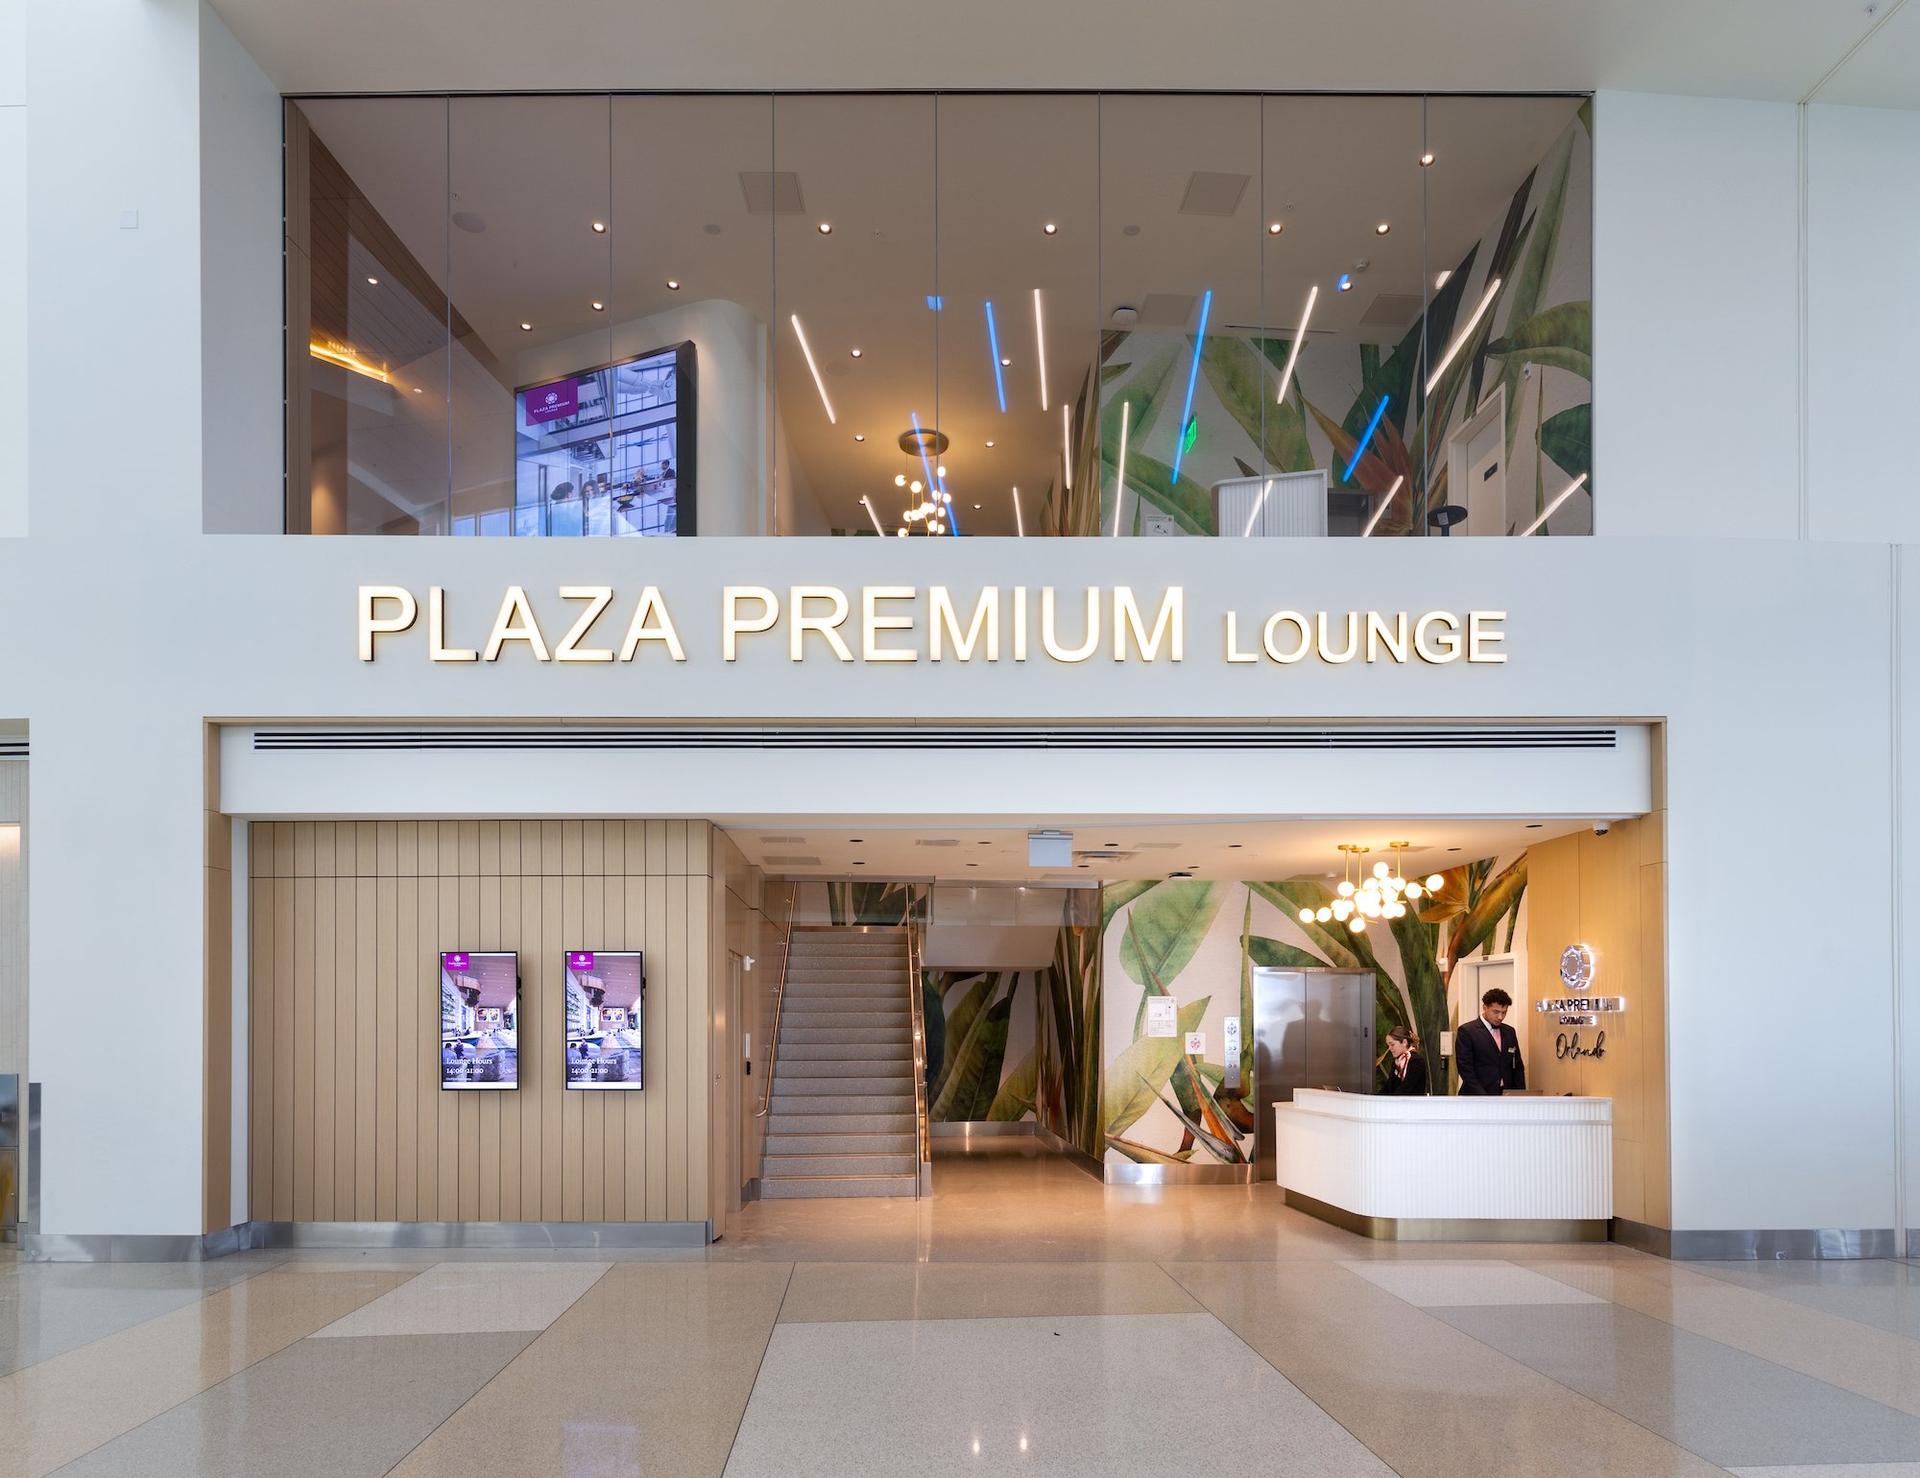 Plaza Premium Lounge image 7 of 7